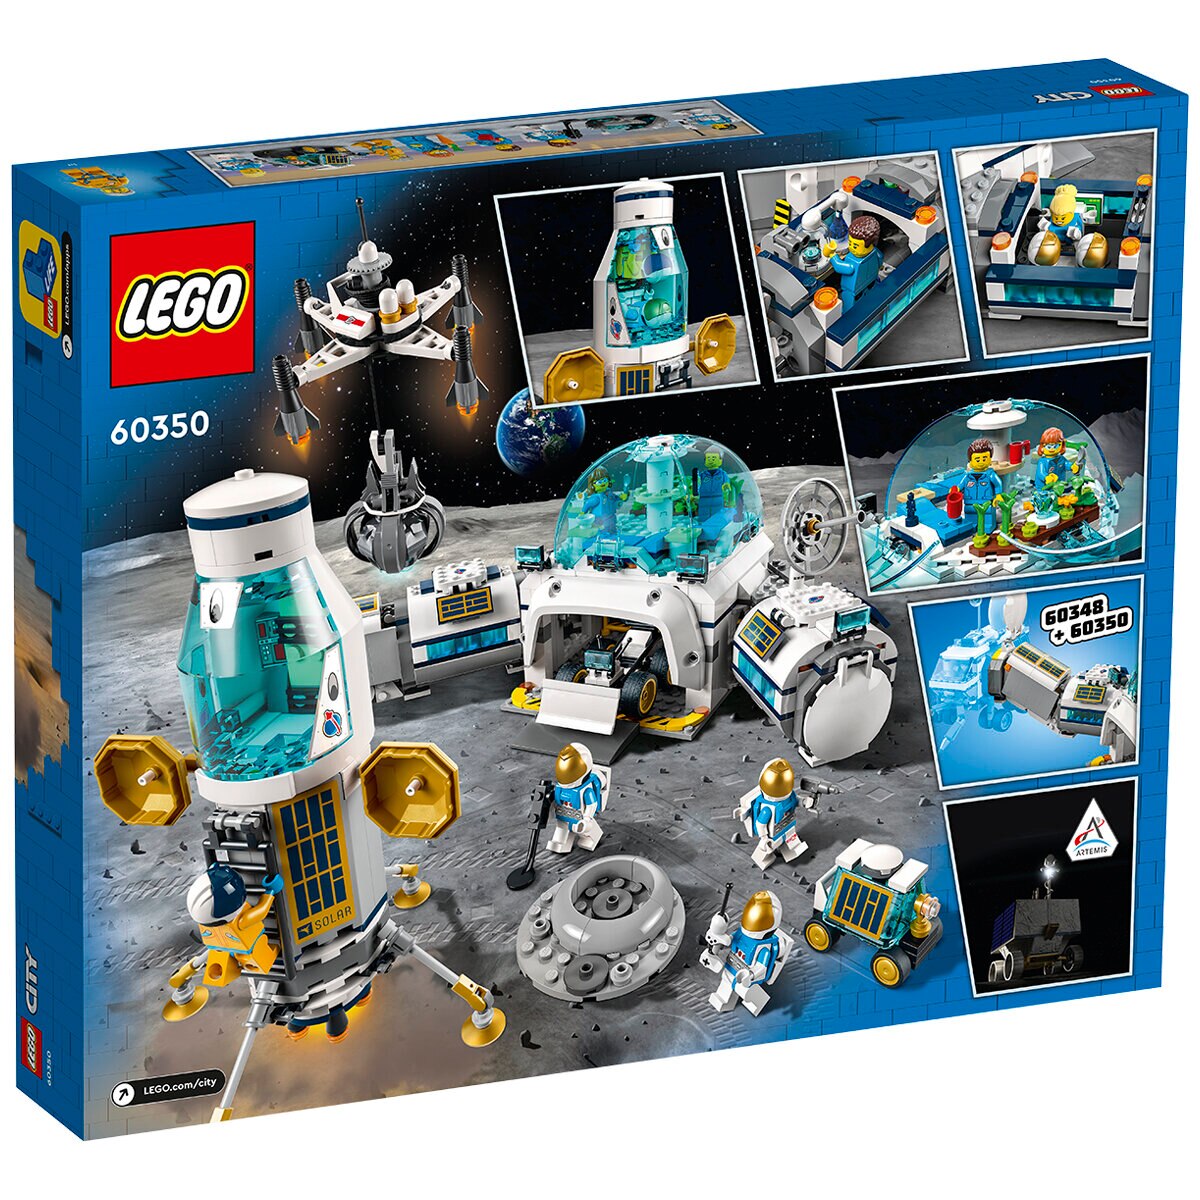 LEGO City Space Lunar Research Base 60350